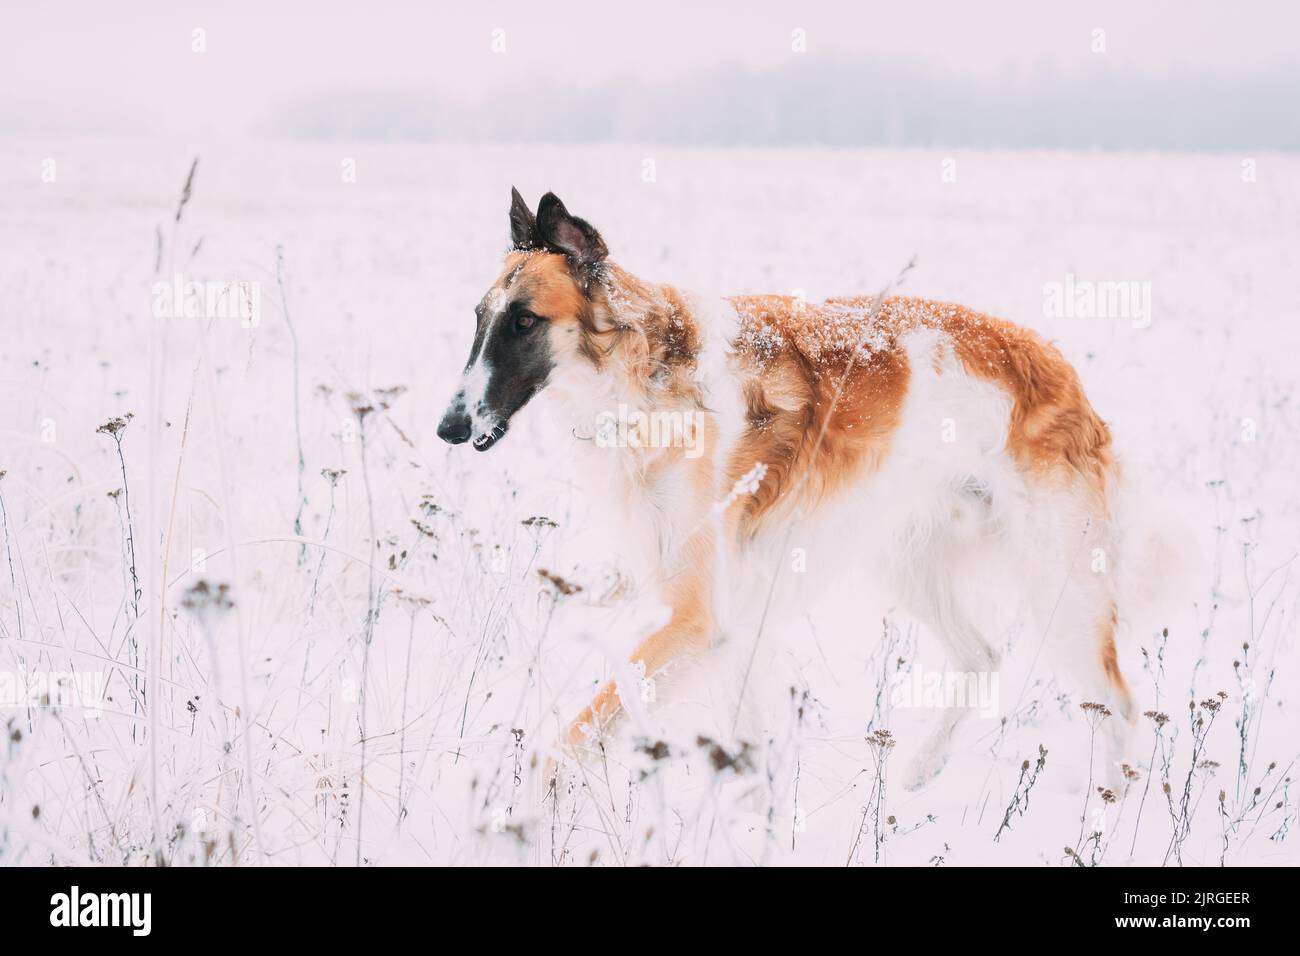 Russian Wolfhound Hunting Sighthound Russkaya Psovaya Borzaya Dog During Hare-hunting At Winter Day In Snowy Field Stock Photo